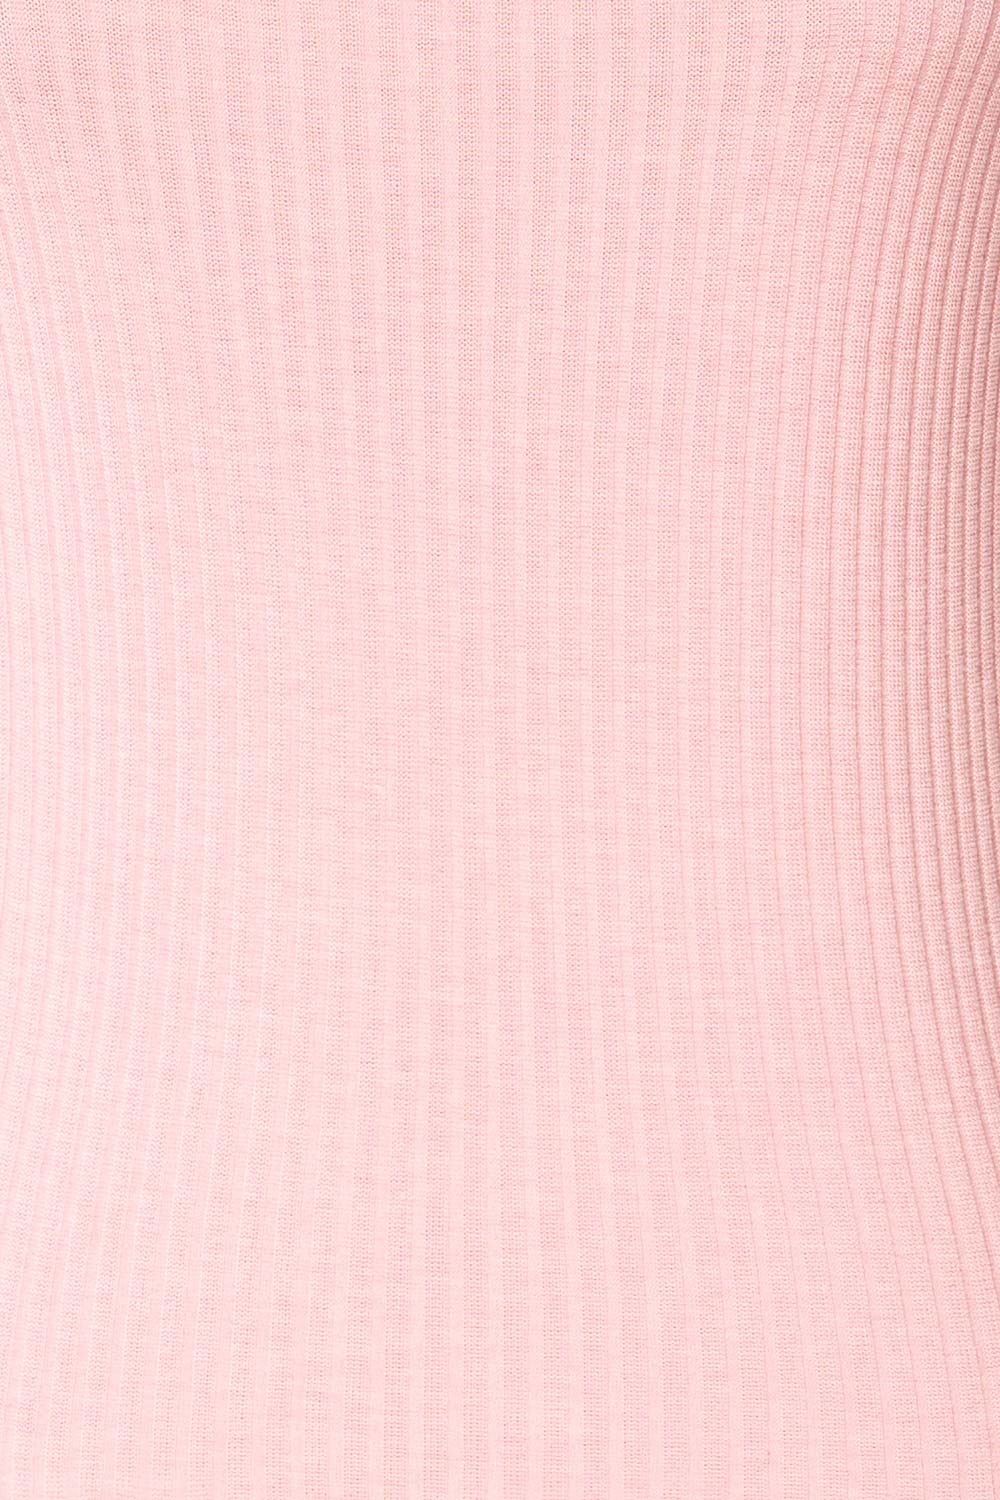 Loula Pink Ribbed Frill-Trimmed Crop Top | La petite garçonne fabric